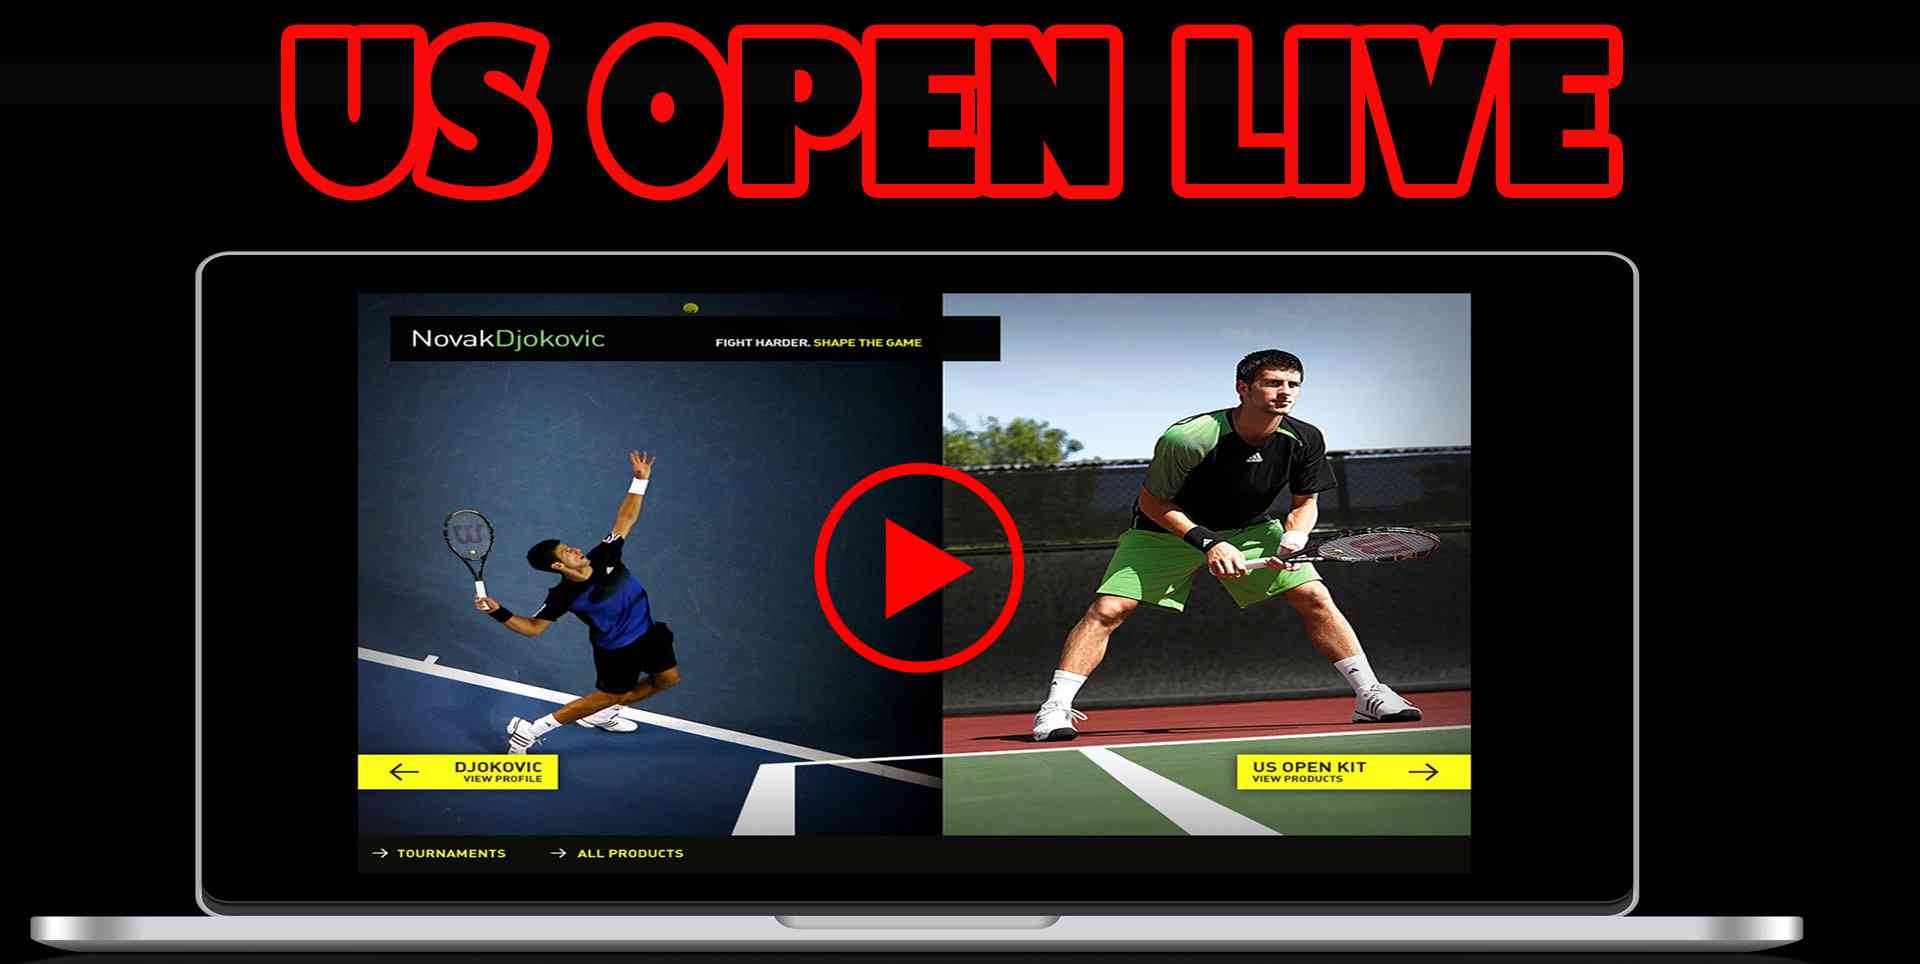 US Open Tennis 2018 Semifinals Live Stream